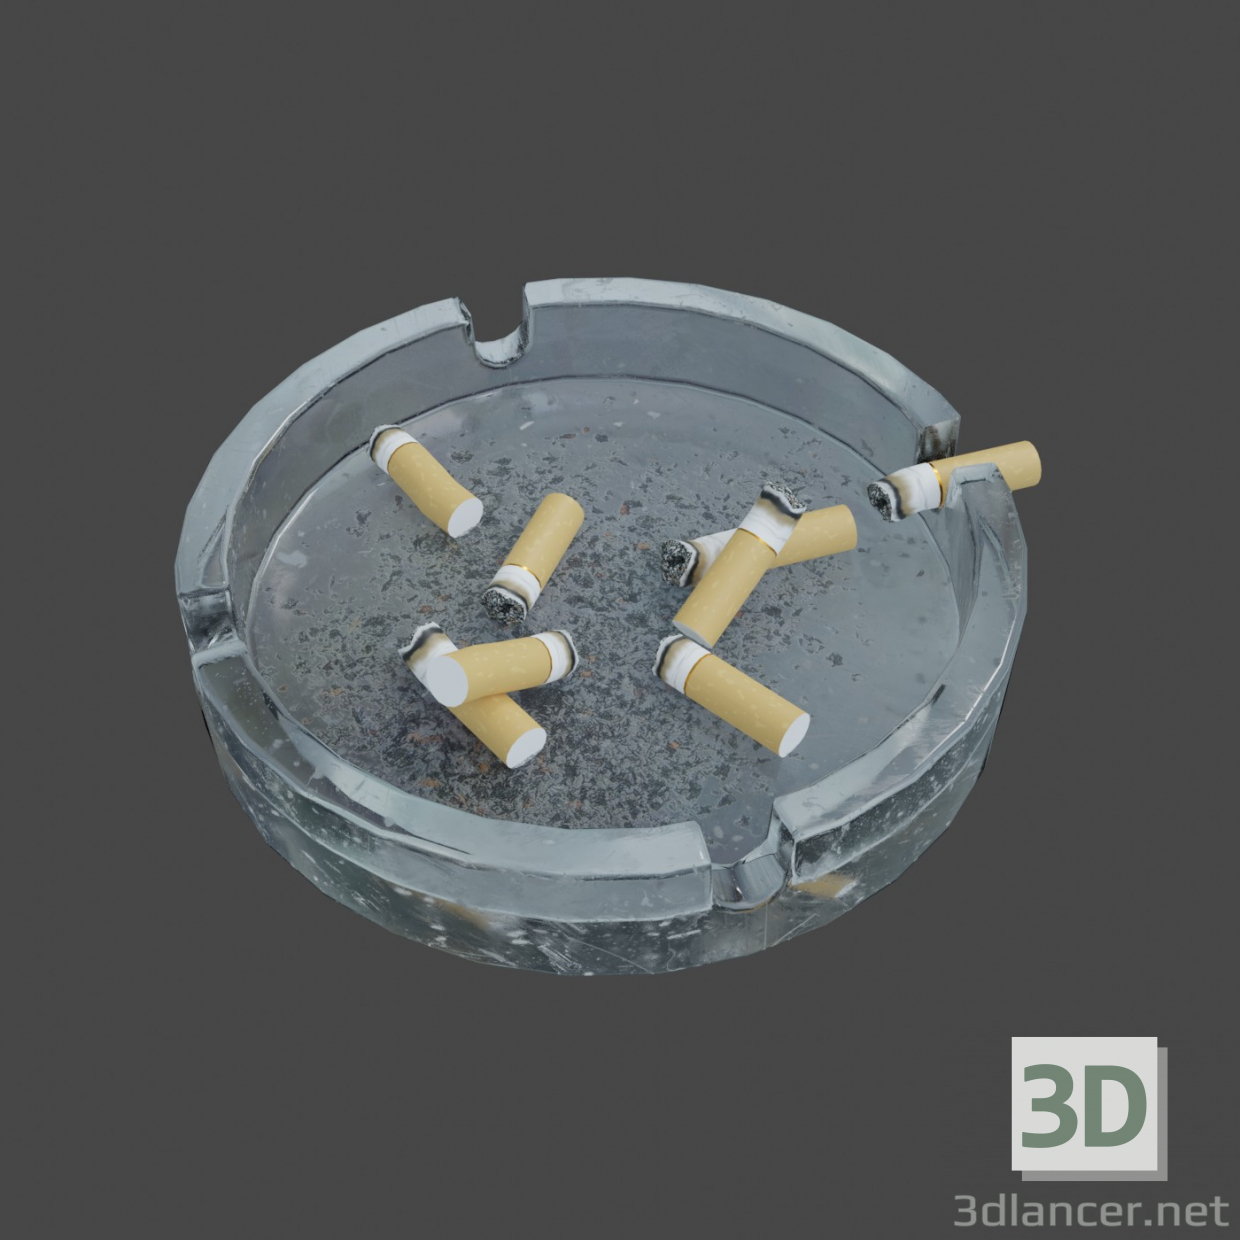 Cenicero con colillas de cigarrillos 3D modelo Compro - render